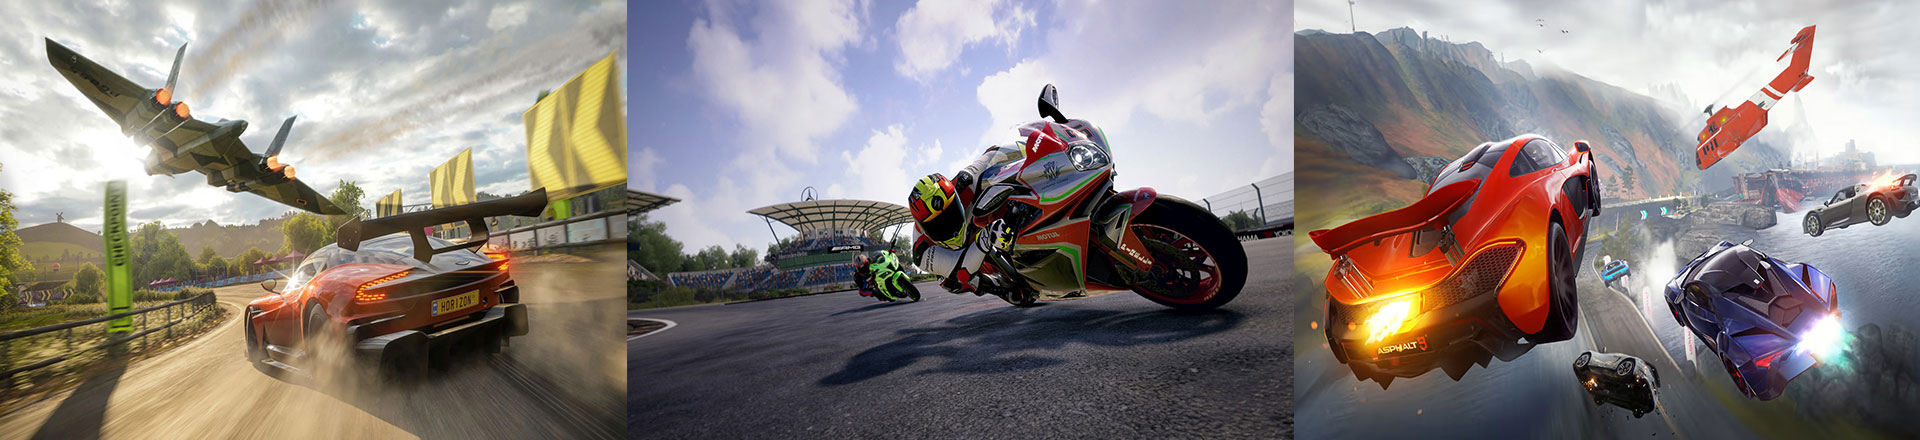 Virtual Rcades in Kelowna provides incredible racing themed virtual reality experiences.